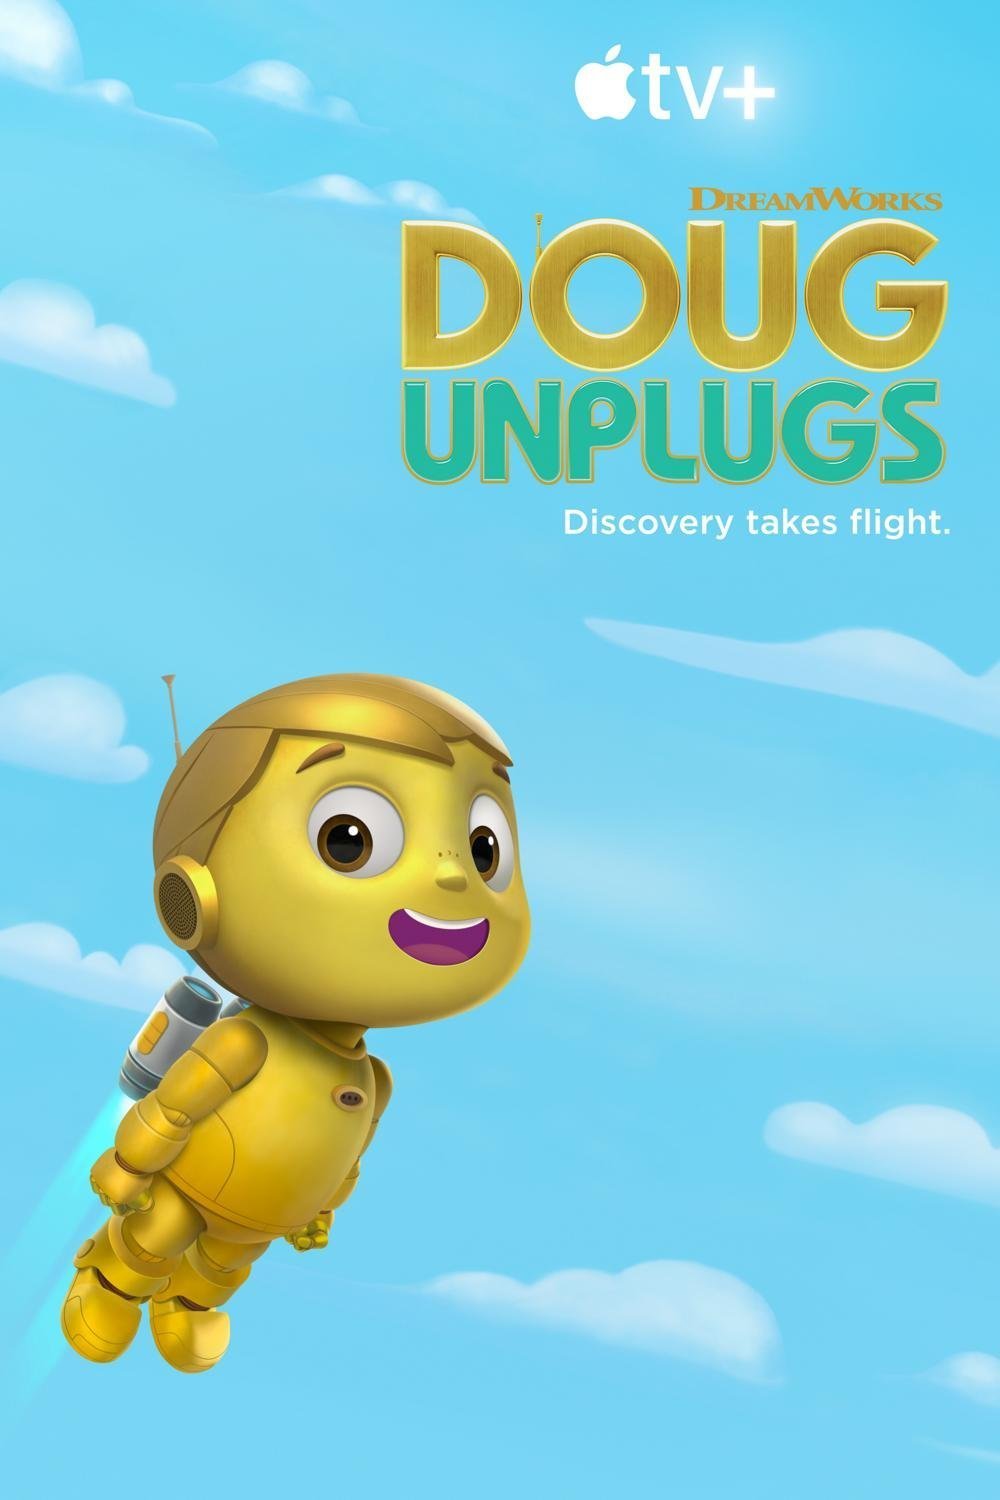 Poster of the movie Doug Unplugs